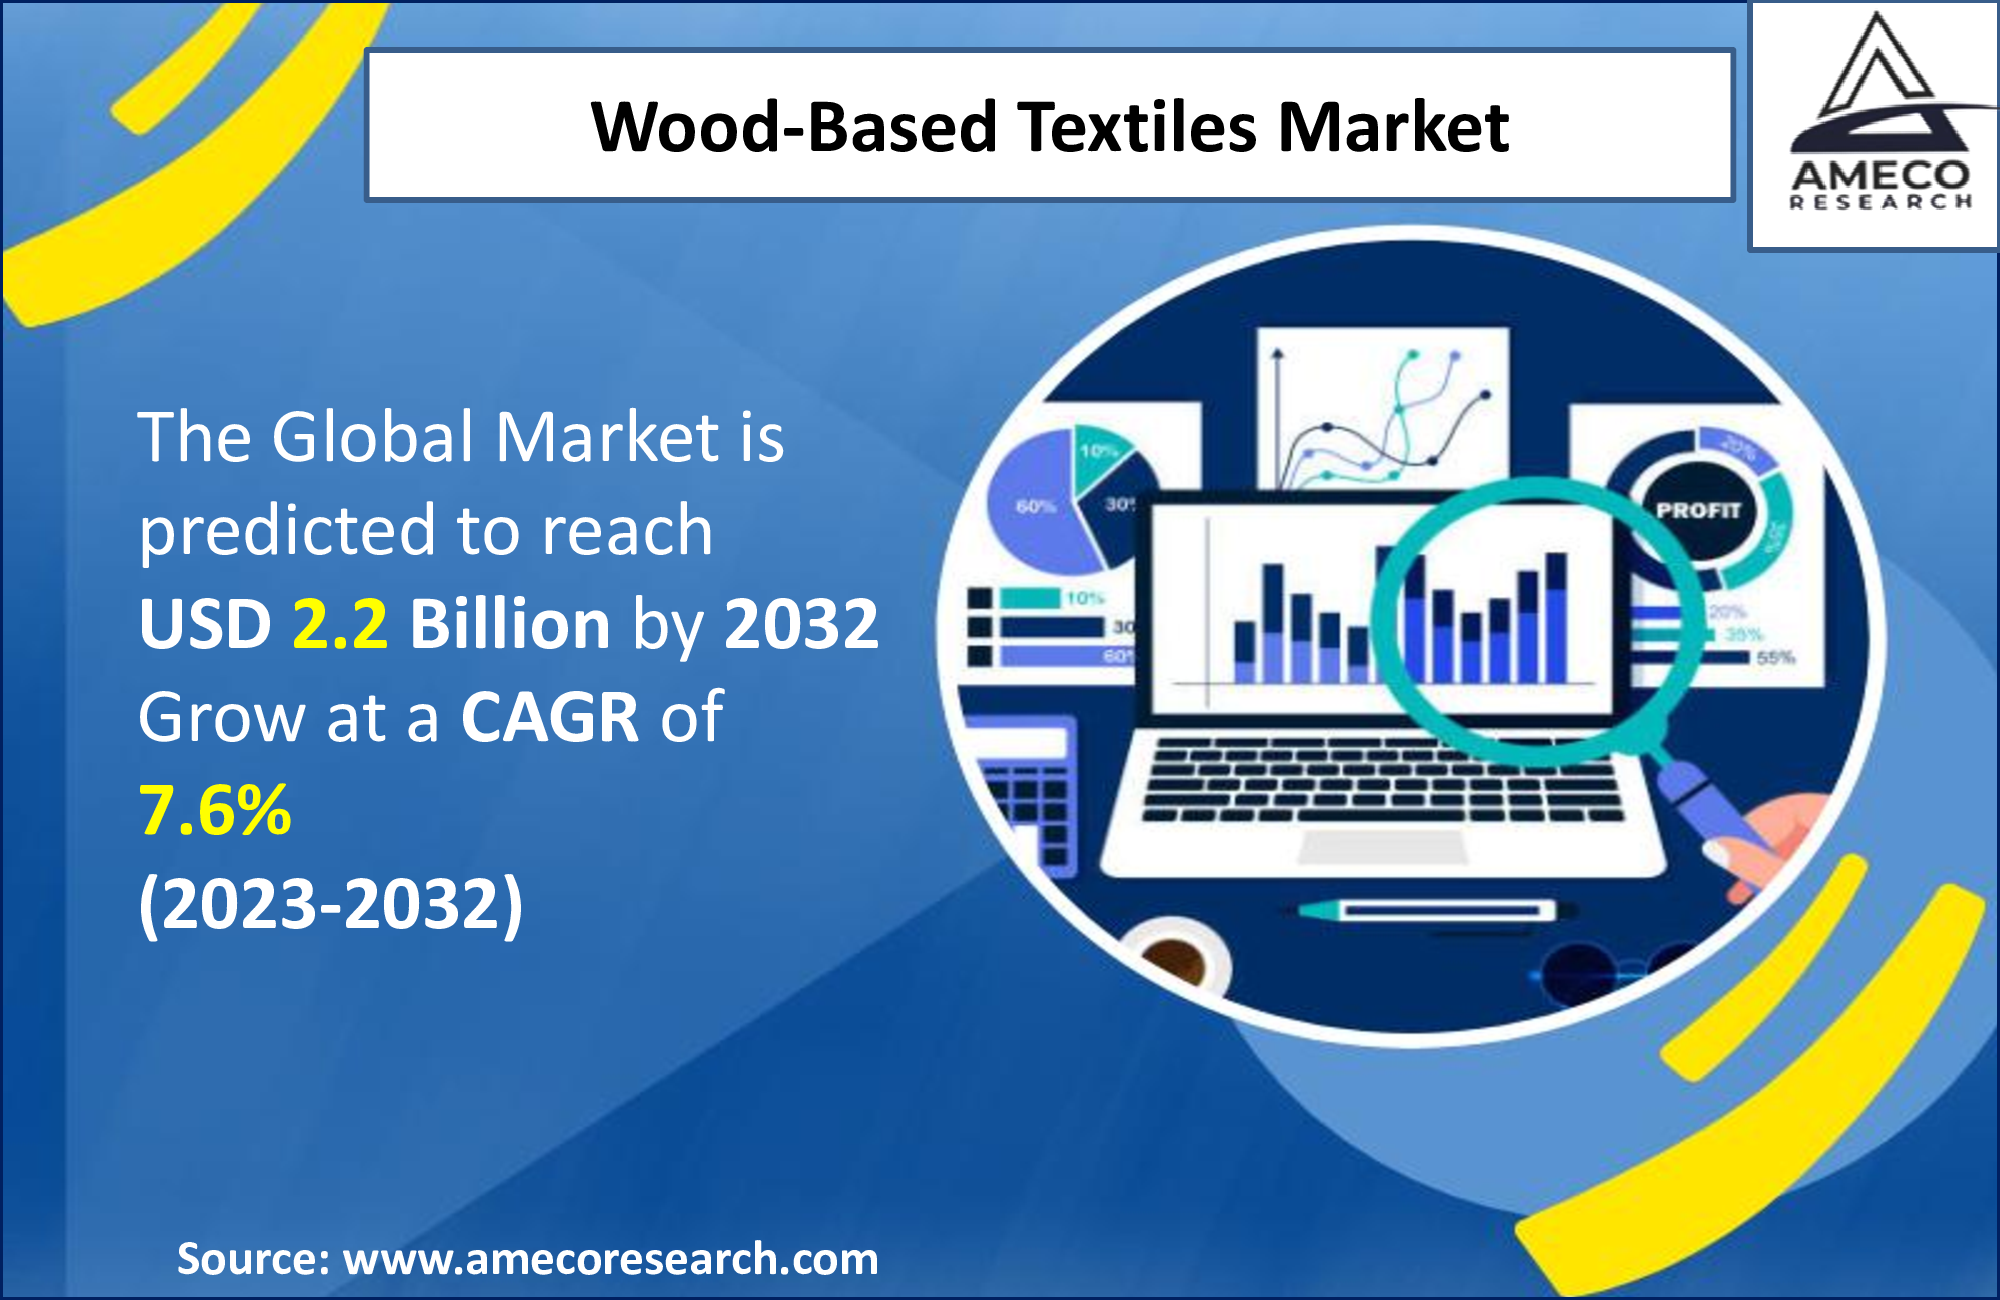 Wood-Based Textiles Market